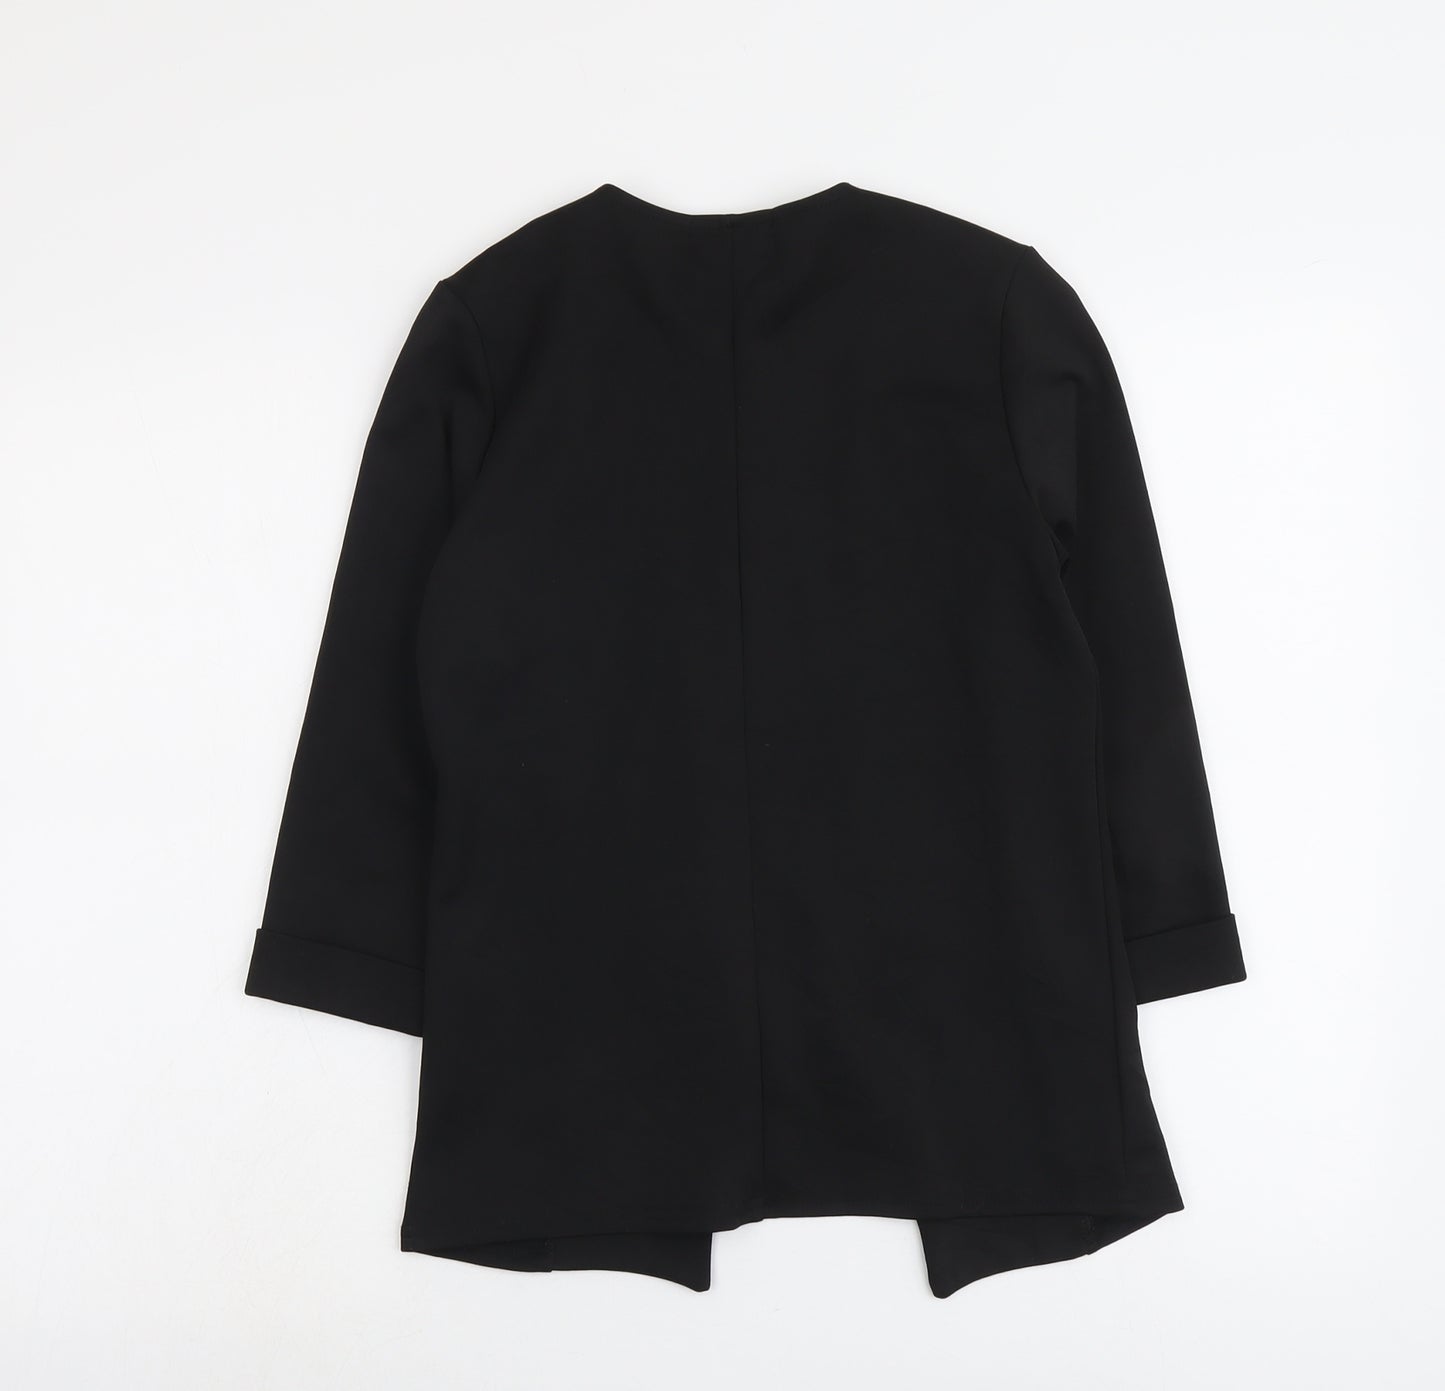 Parisian Womens Black Jacket Blazer Size 10